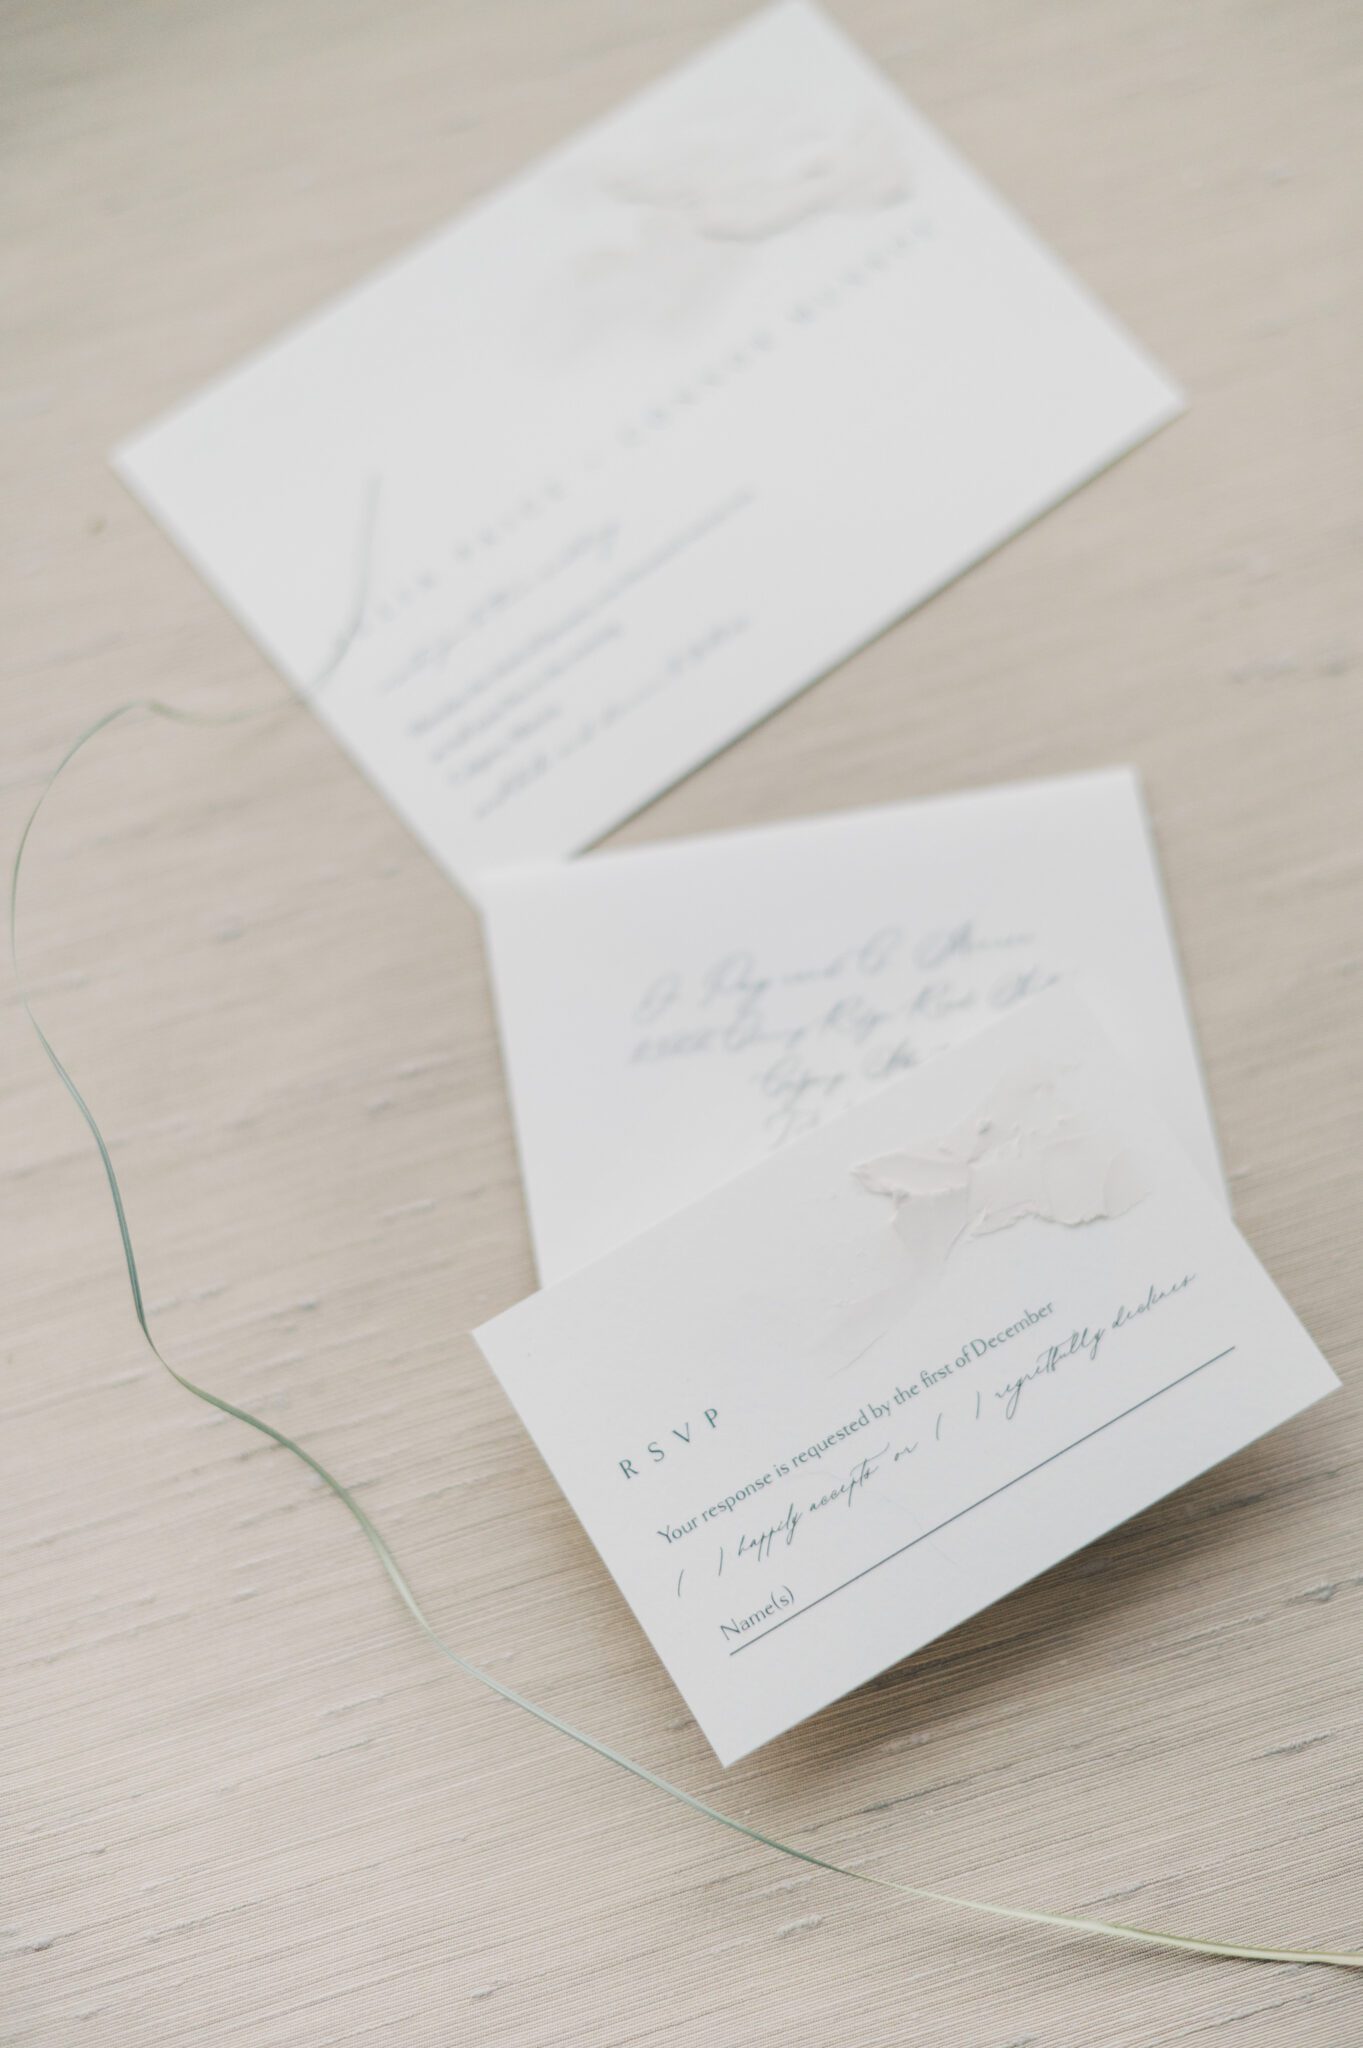 artful invitation featuring nature-inspired textures by Plush Invitations, Chic and modern minimalist wedding invitation design